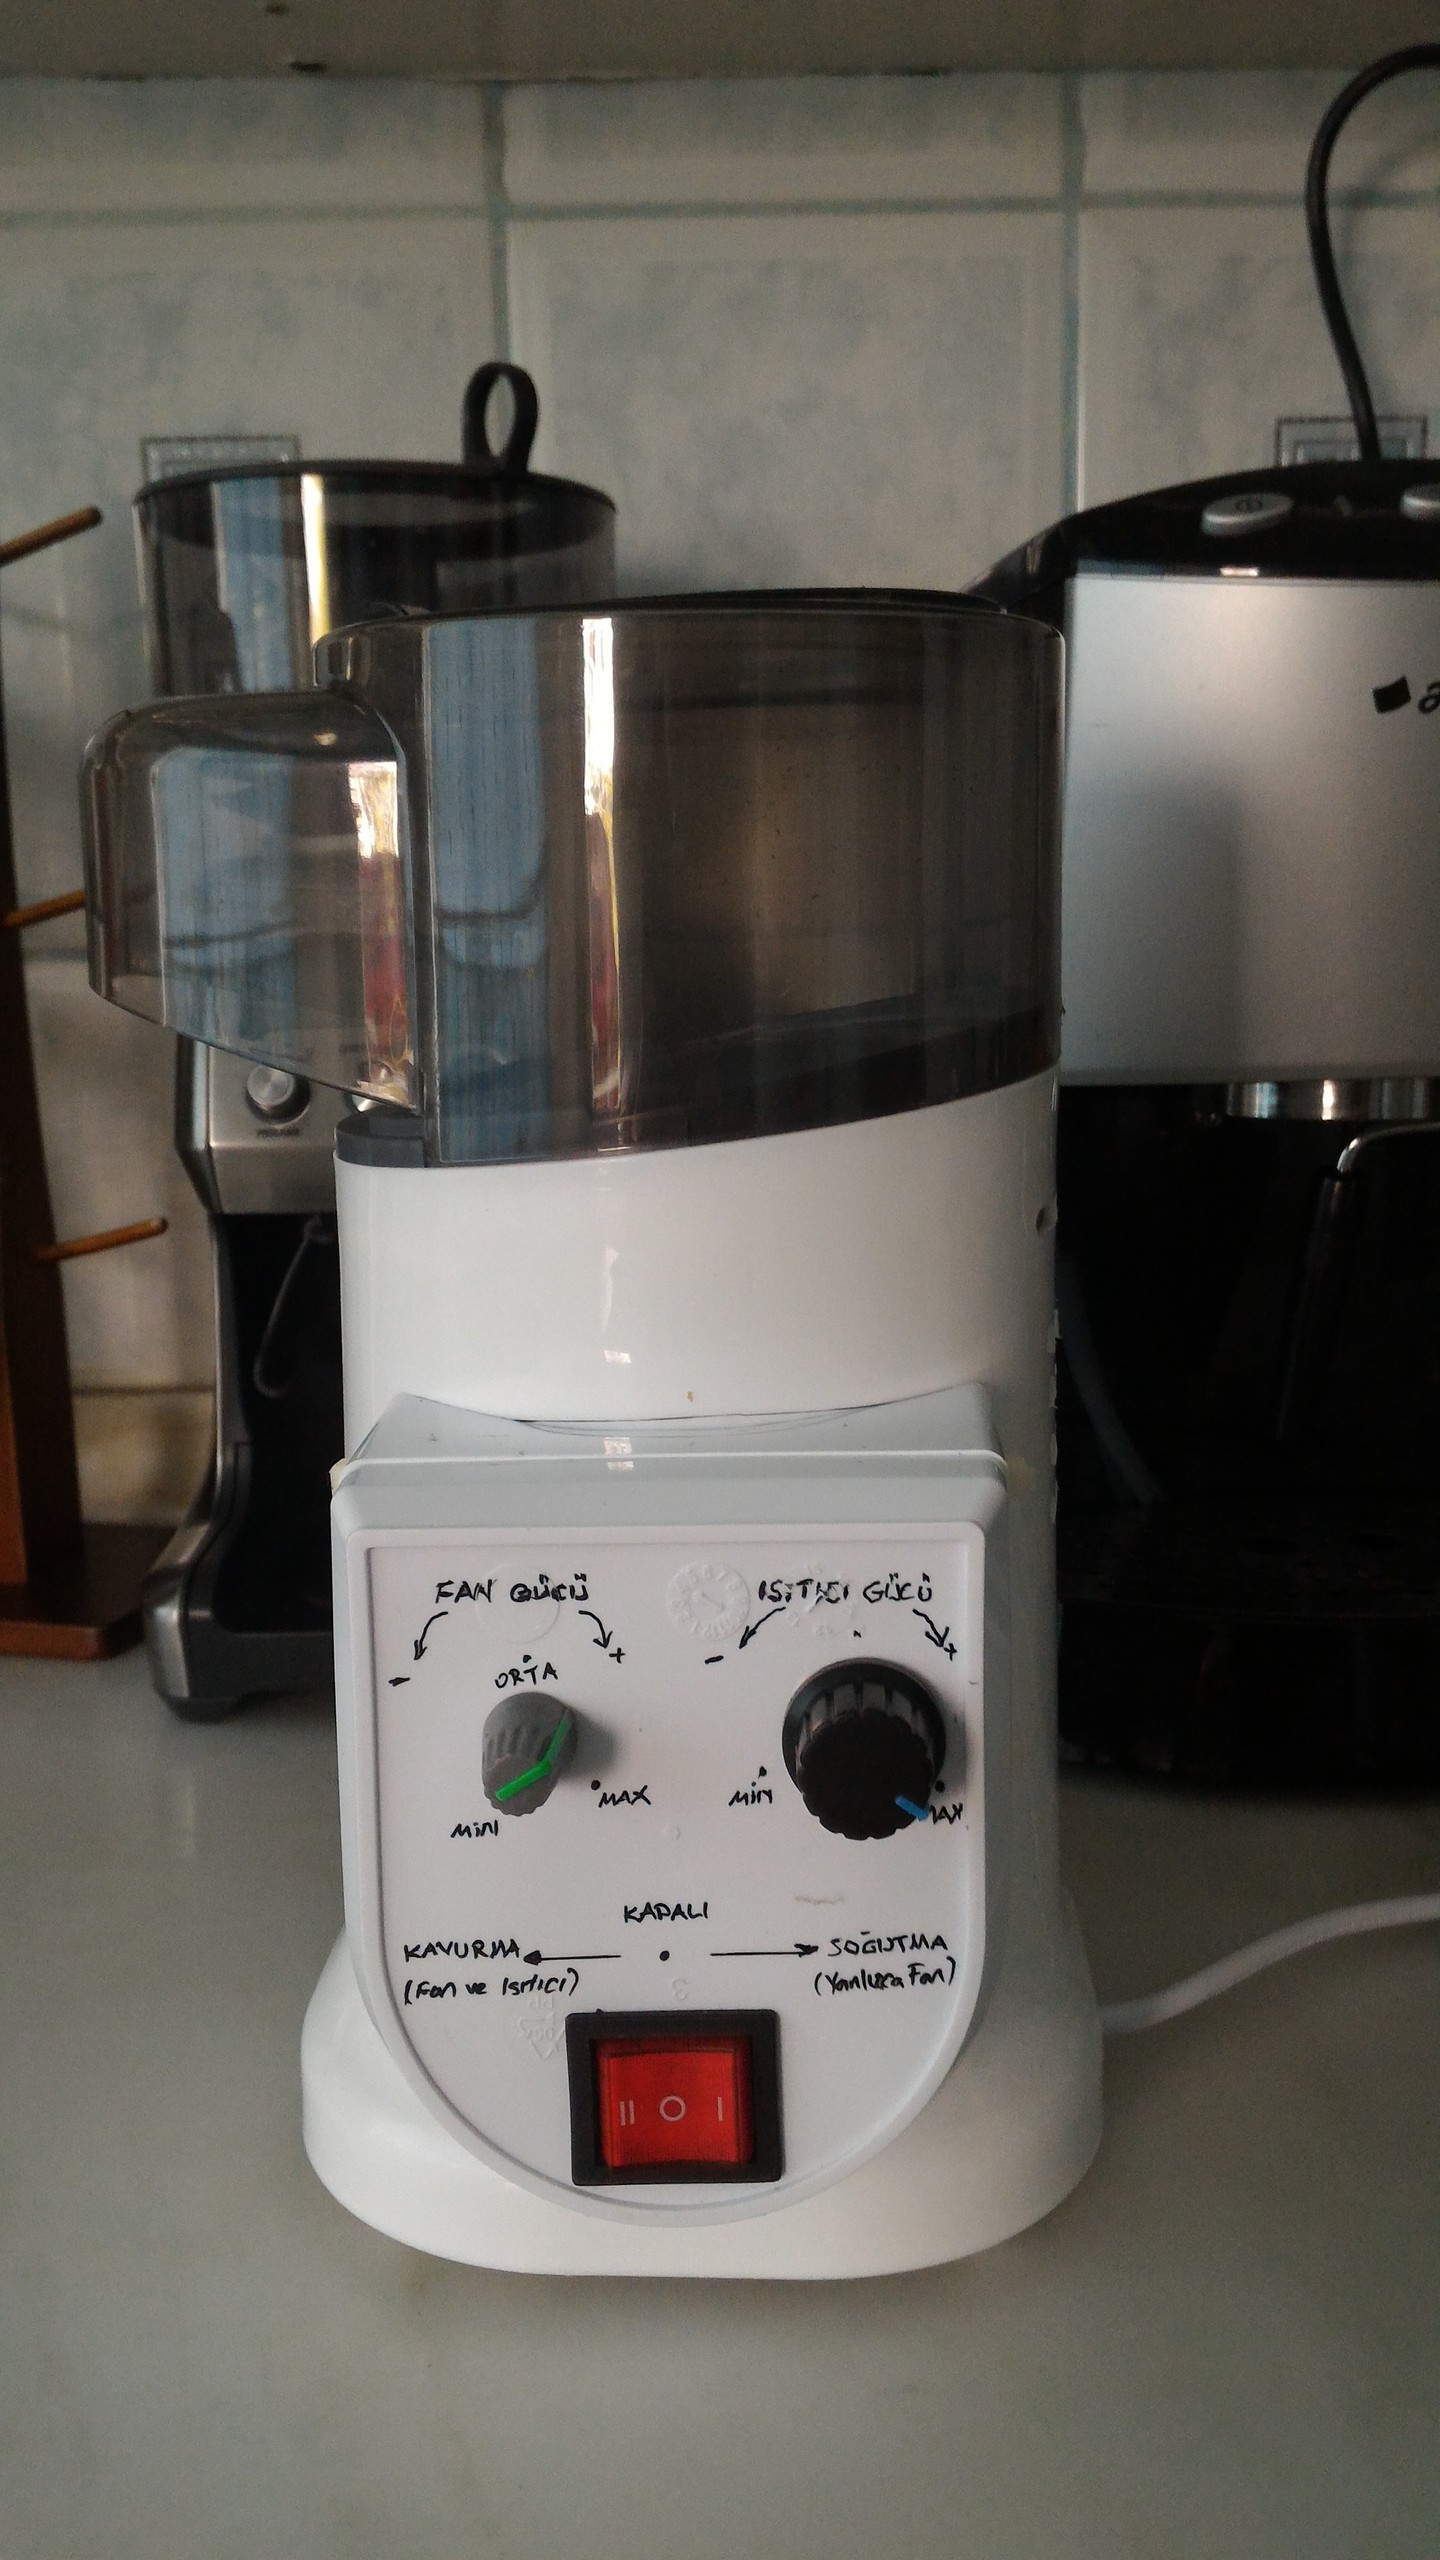  Ev yapımı kahve kavurma makinesi